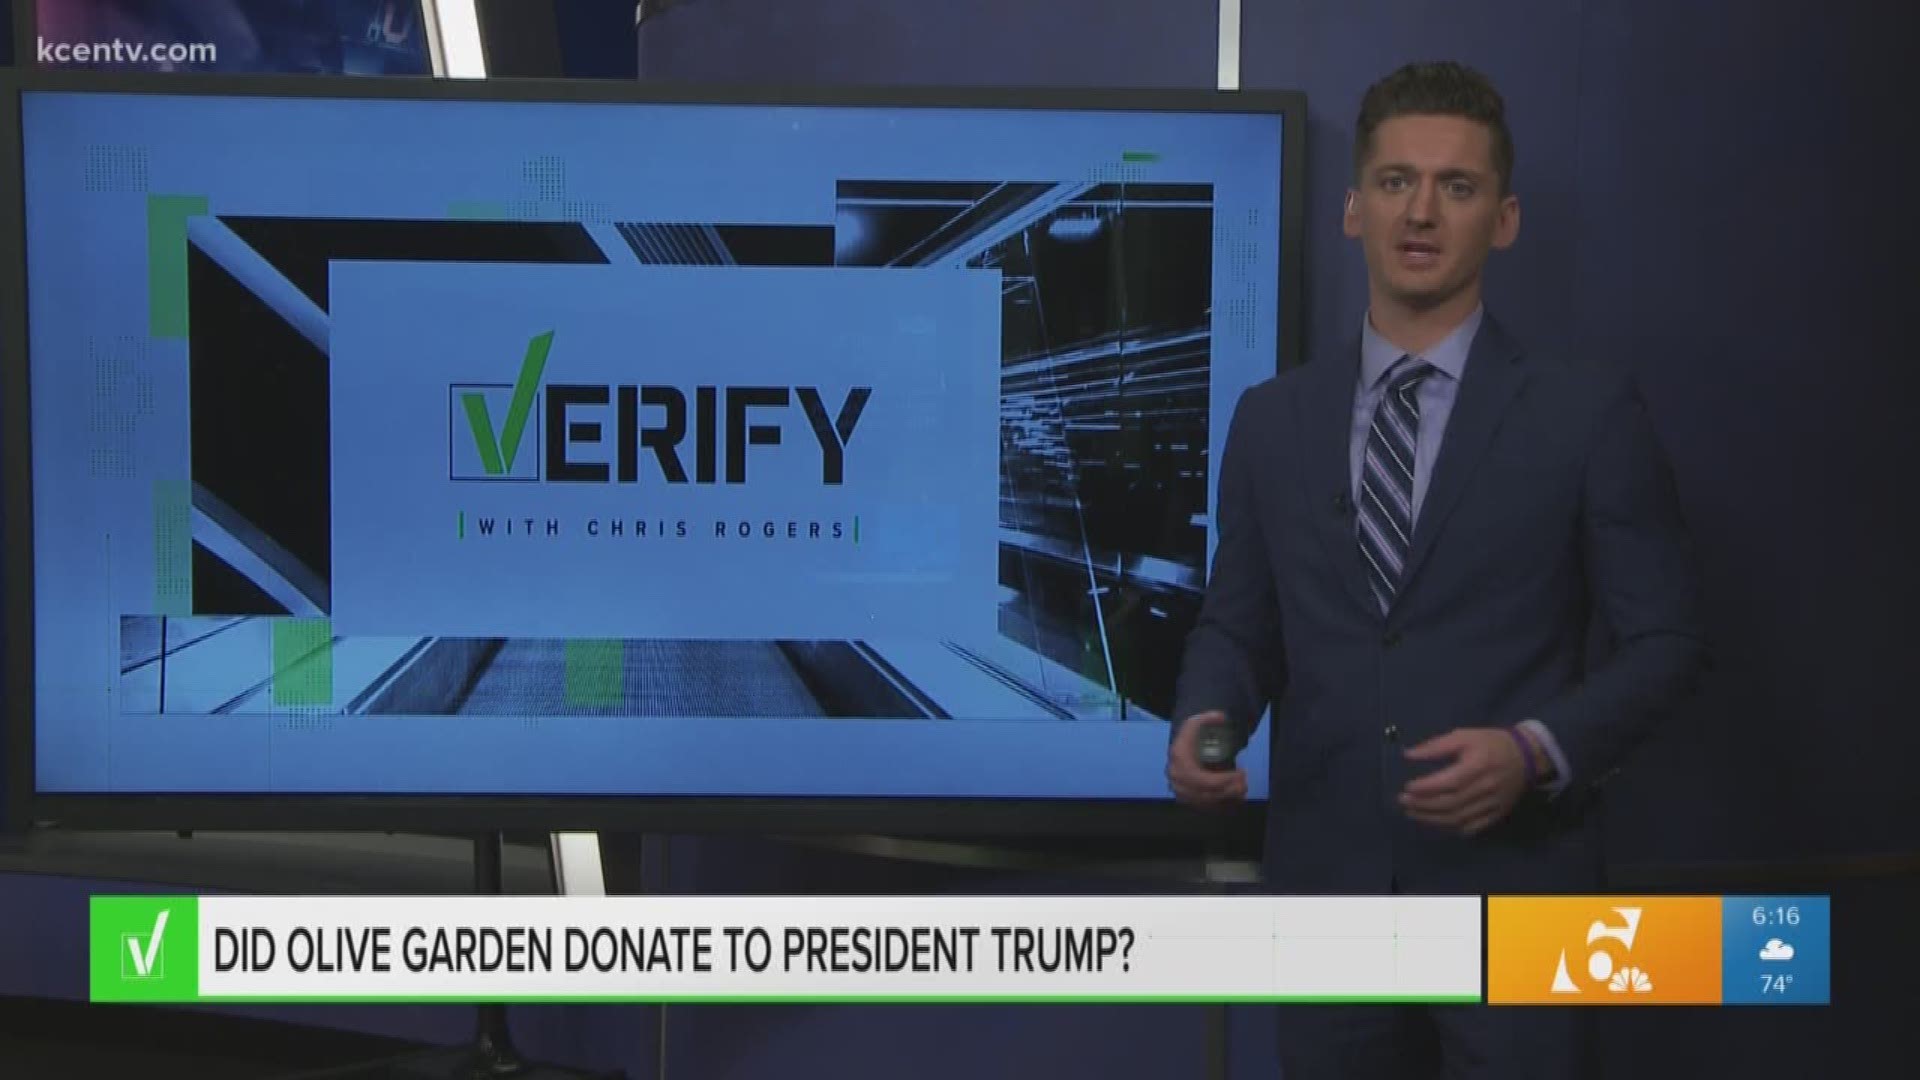 Verify: Did Olive Garden fund the President